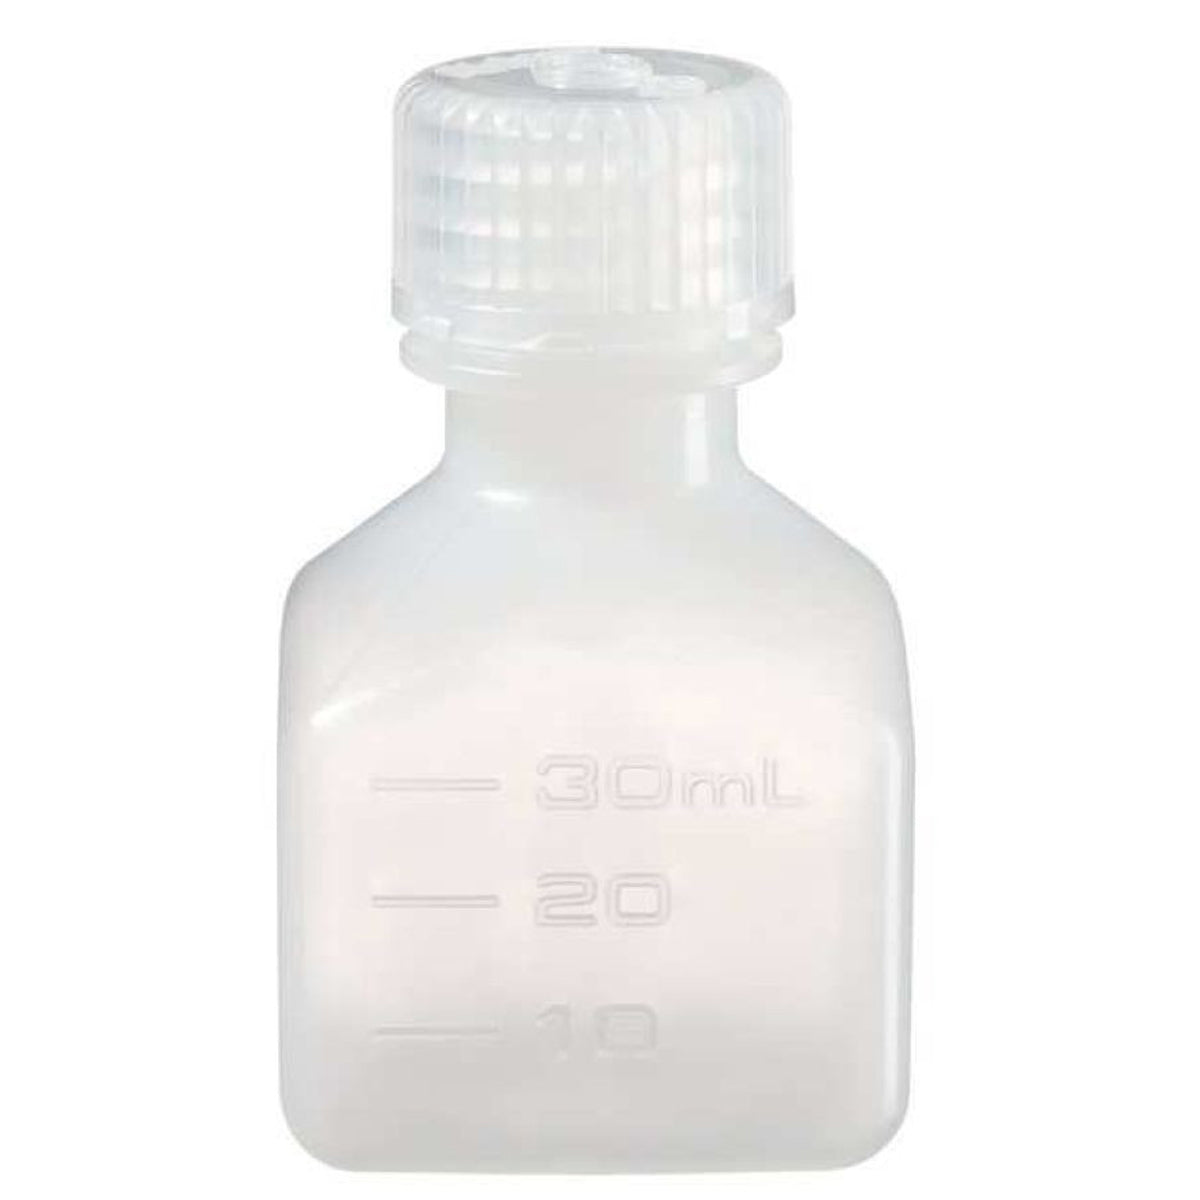 Nalgene HDPE Narrow Mouth Square Bottle - White Nalgene